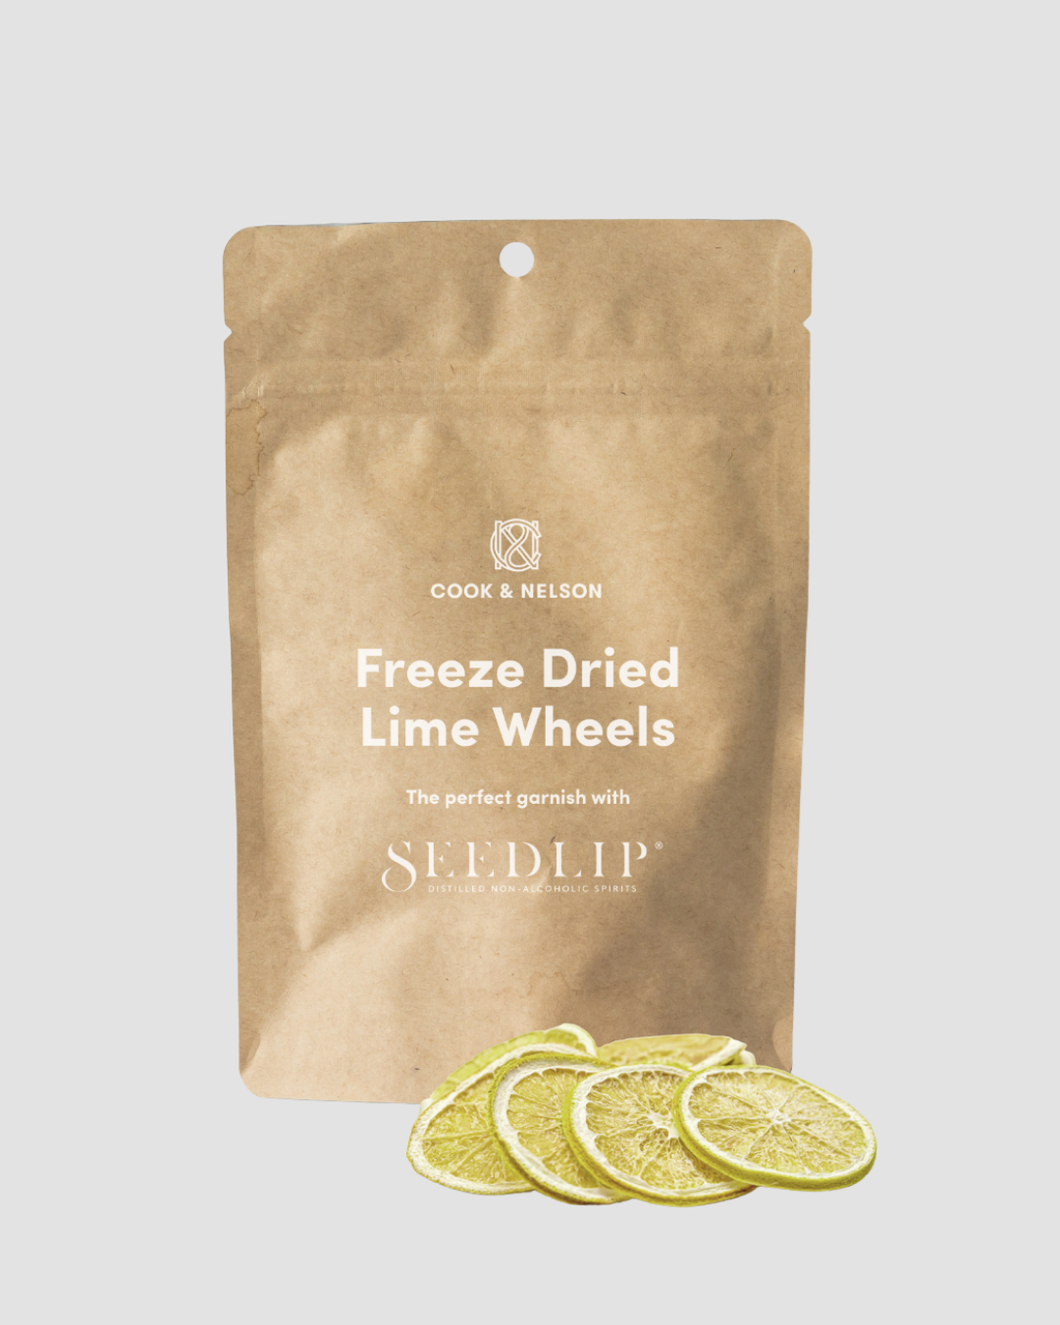 Freezer Dried Limes